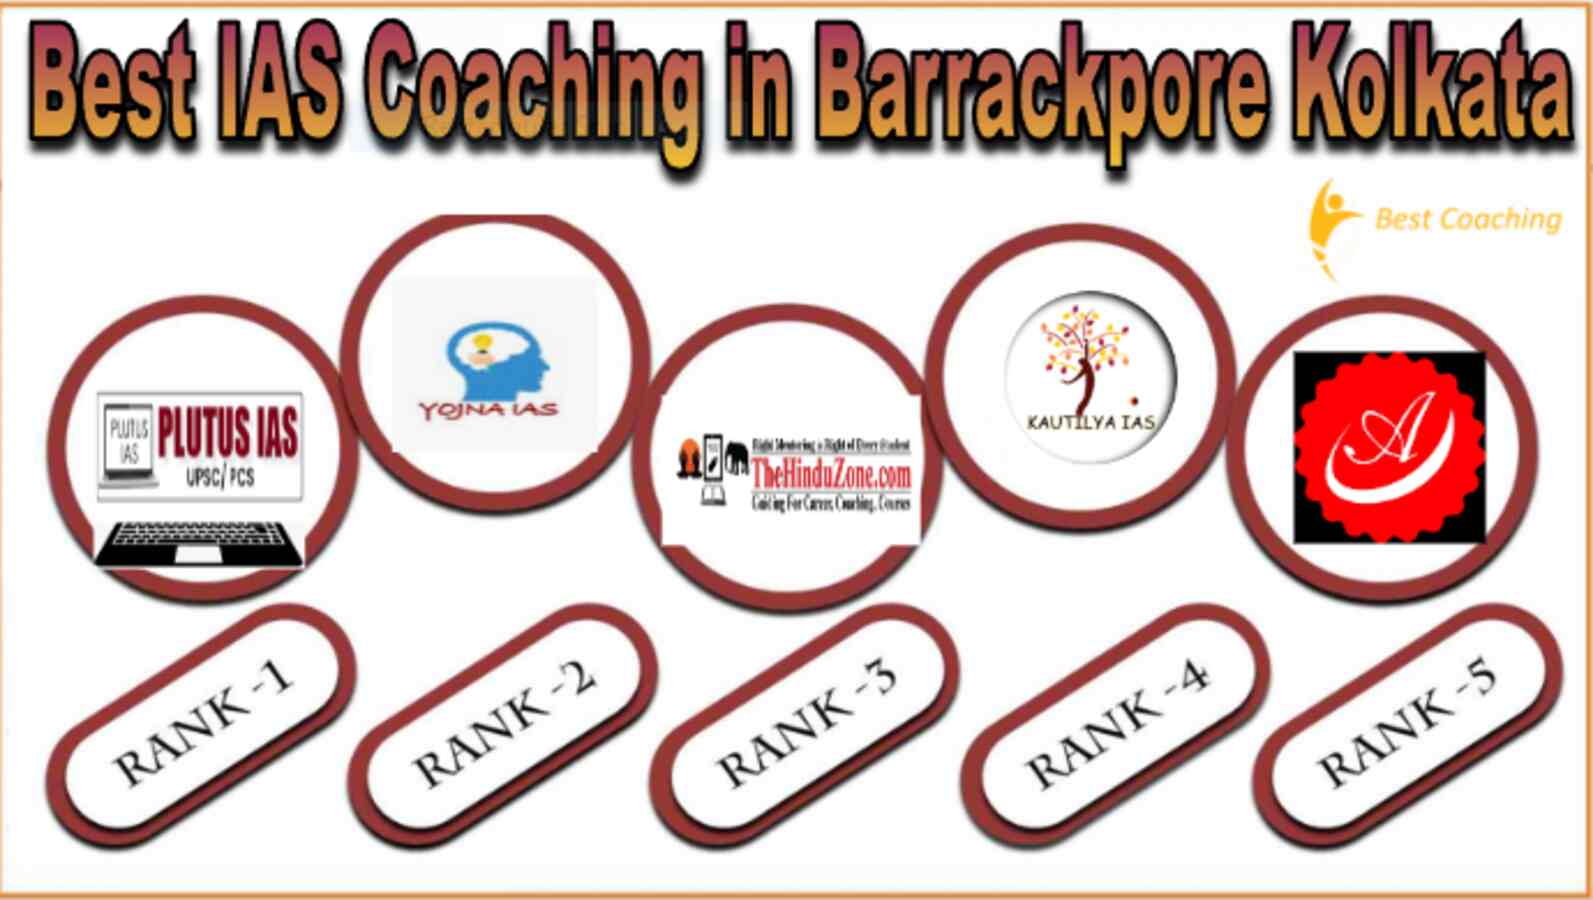 Best IAS coaching in Barrackpore Kolkata